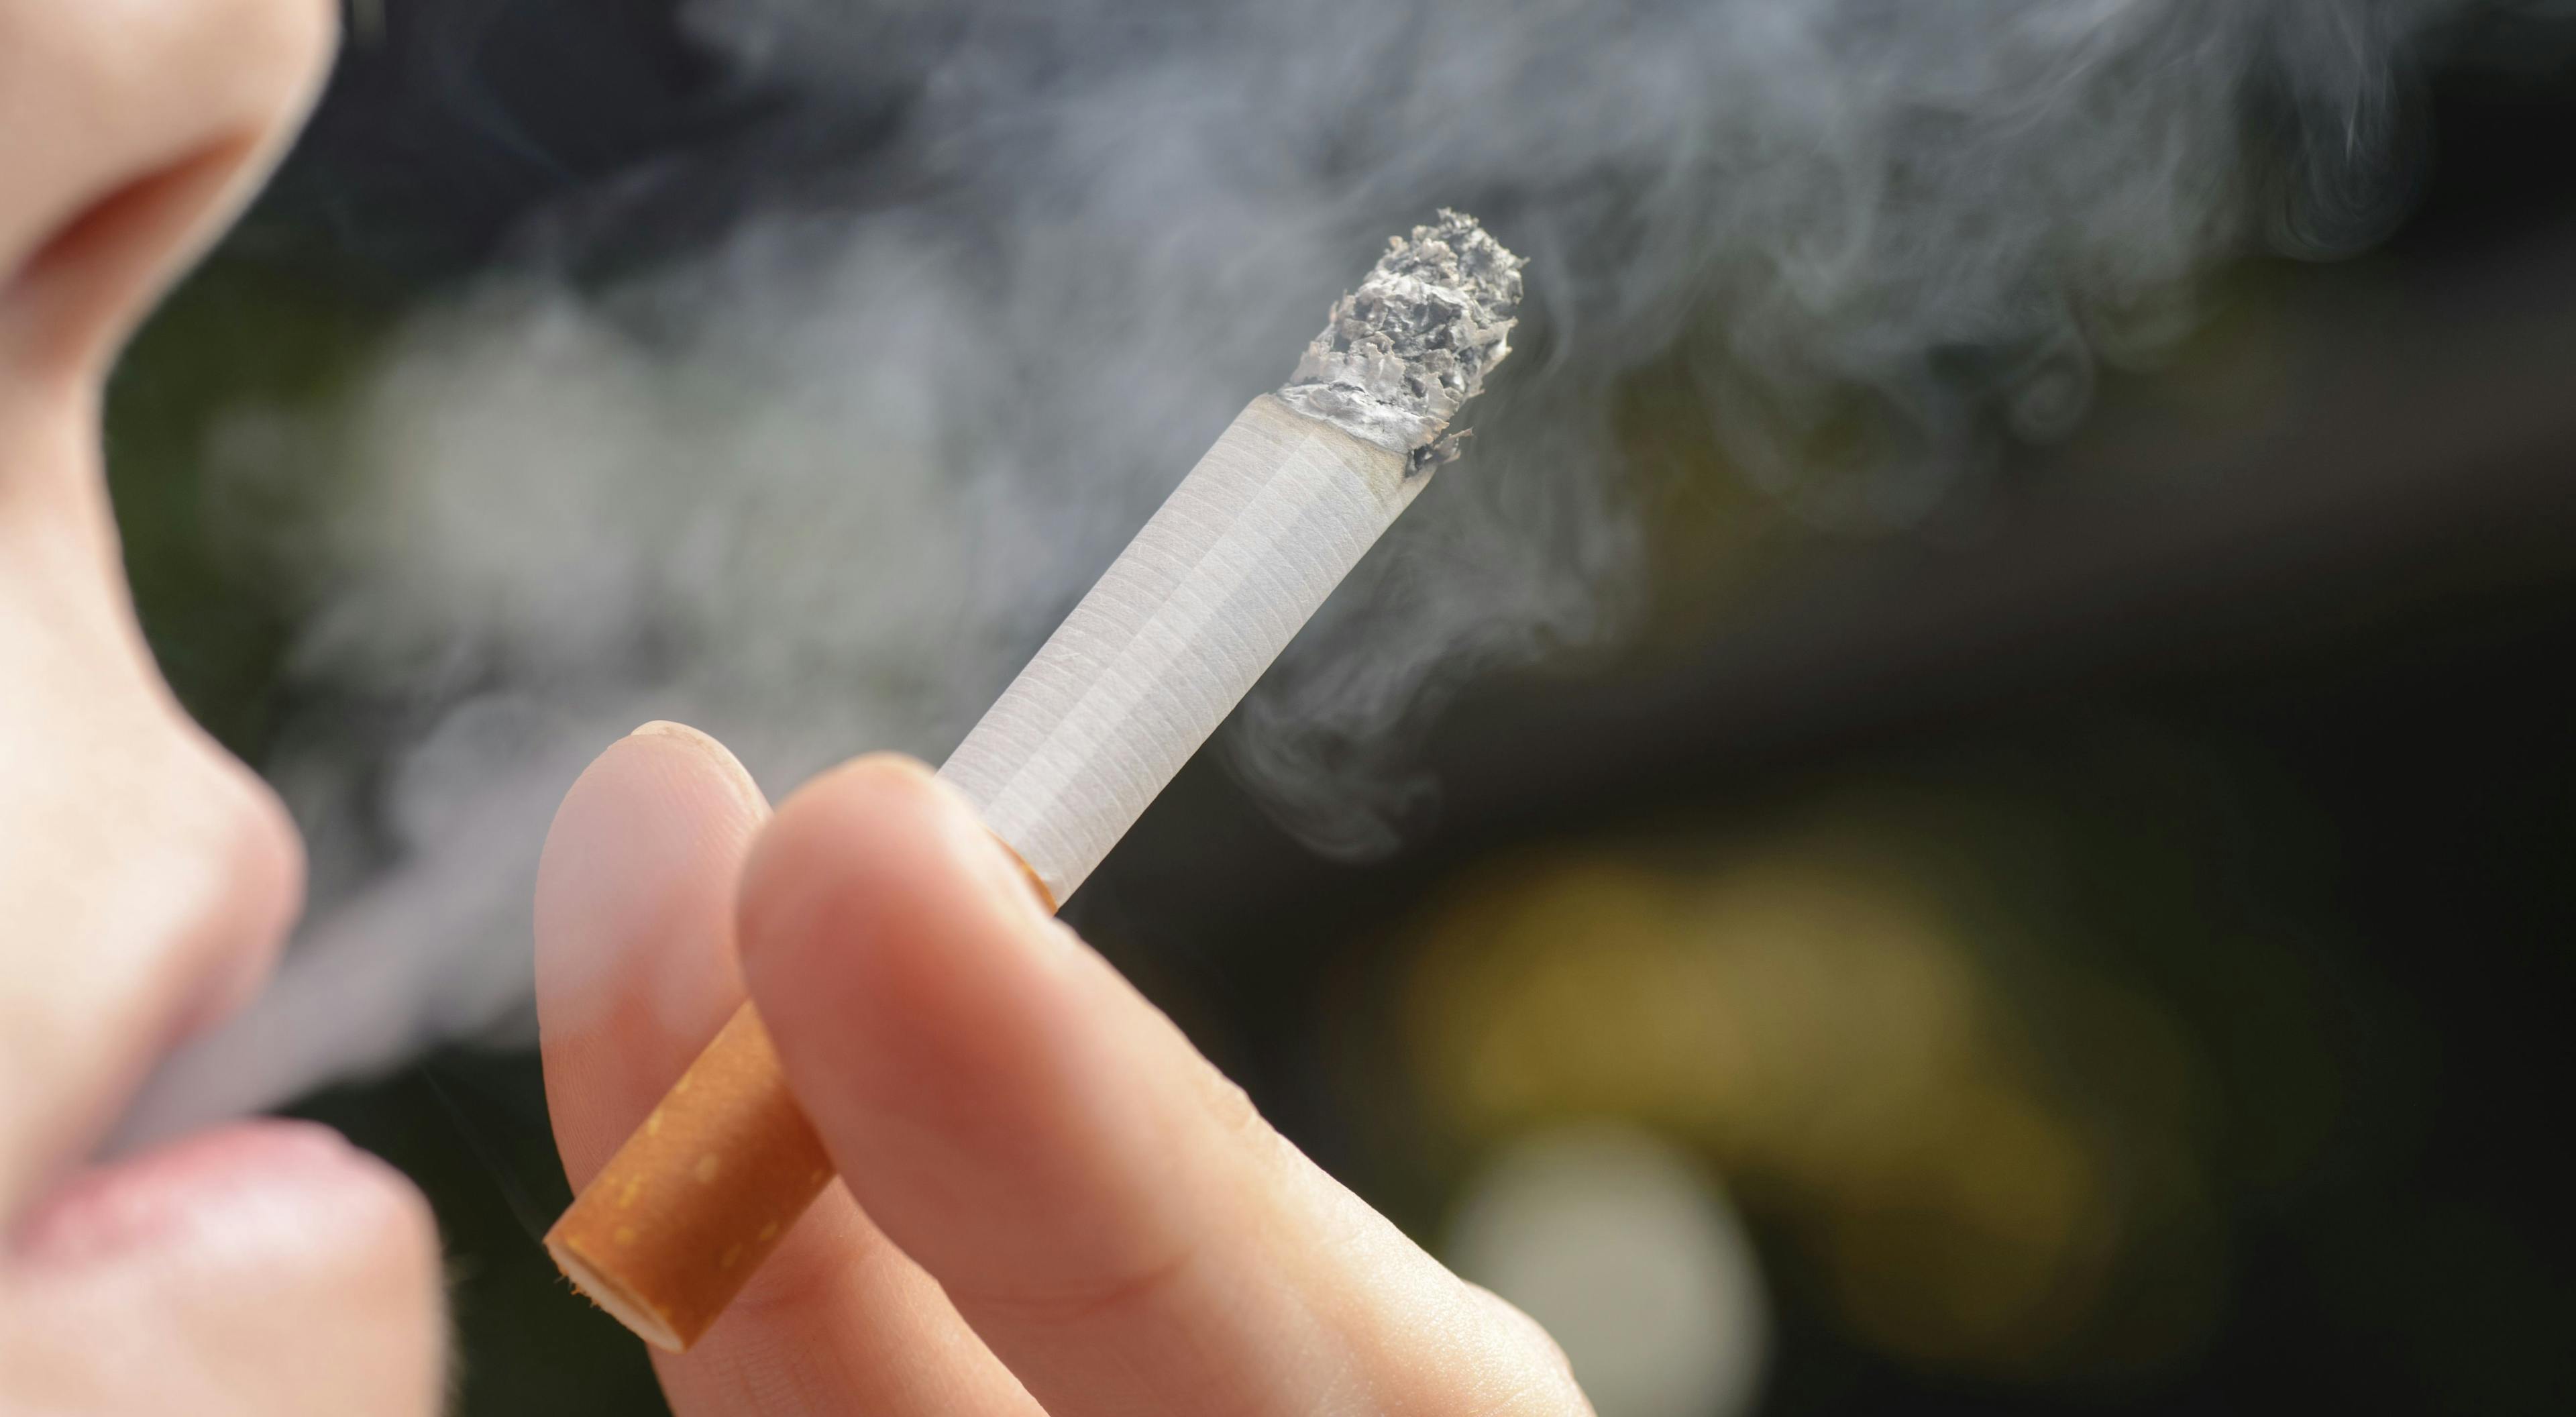 Smoking May Increase Risk for Developing Myeloproliferative Neoplasms